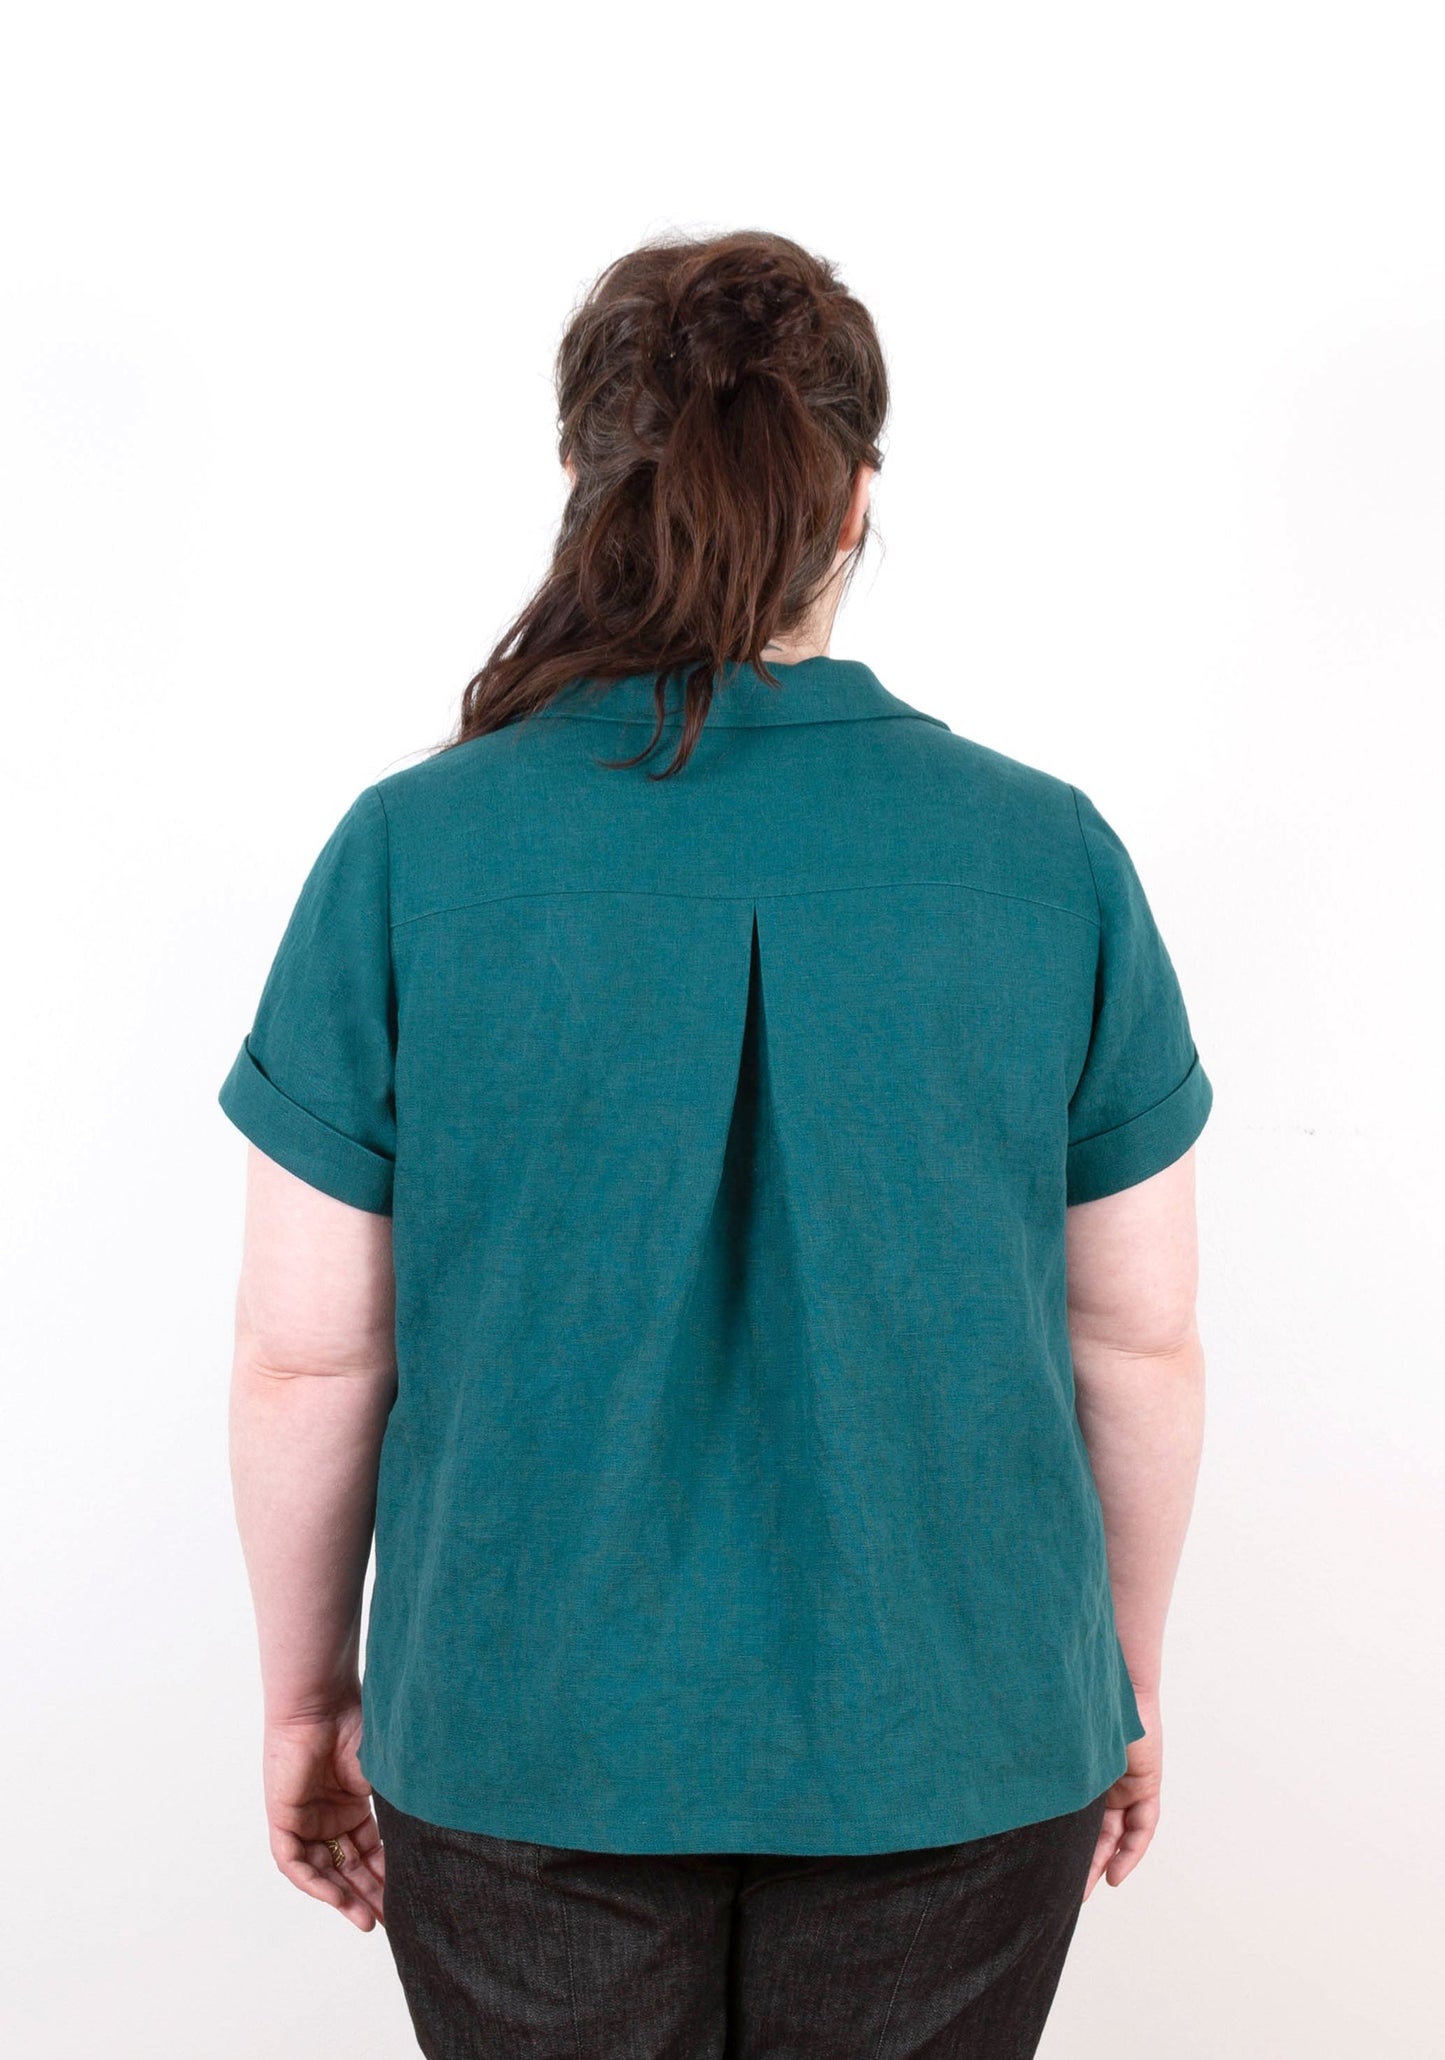 Augusta Shirt and Dress Shirt Pattern - Grainline Studio - Sizes 14 - 30